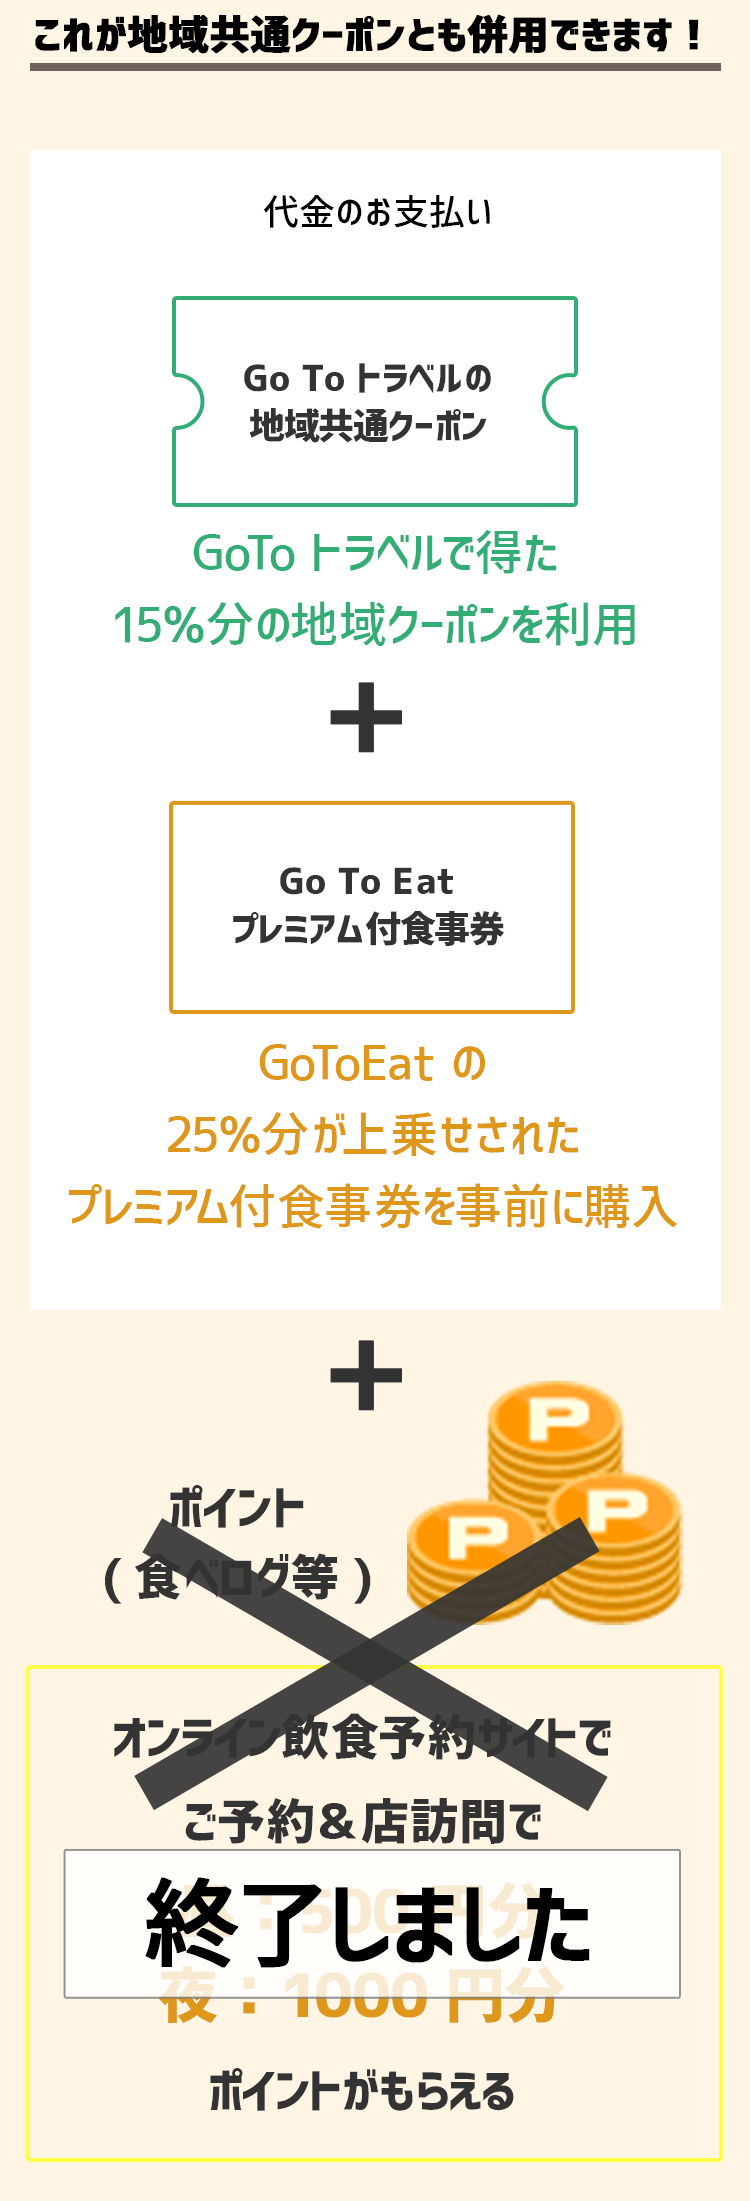 GoTo Eat とは…